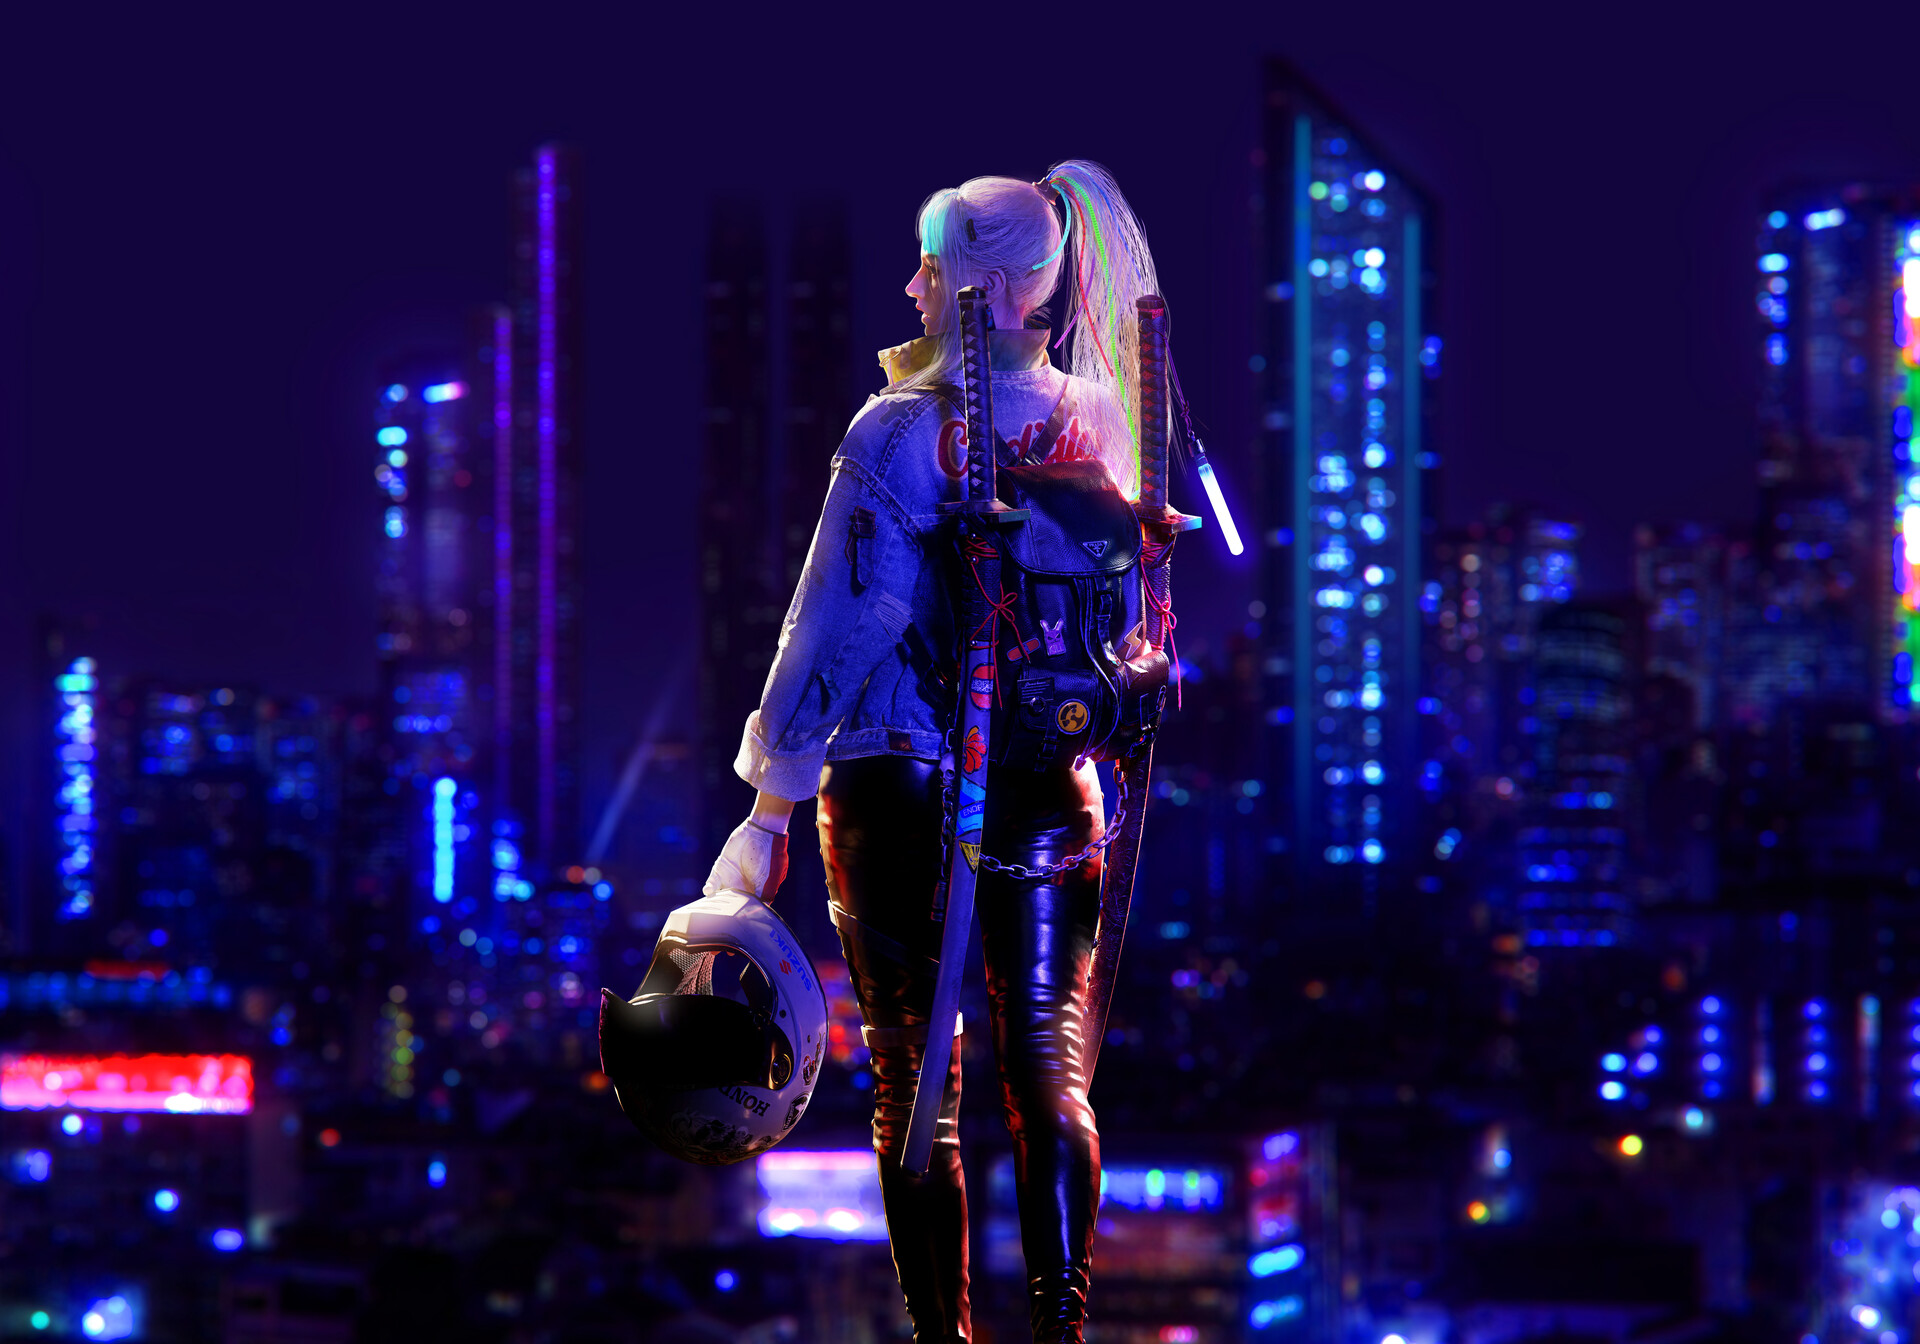 Digital Art Artwork Illustration CGi Women City Blurred Cyberpunk Katana Skyscraper Helmet Character 1920x1344